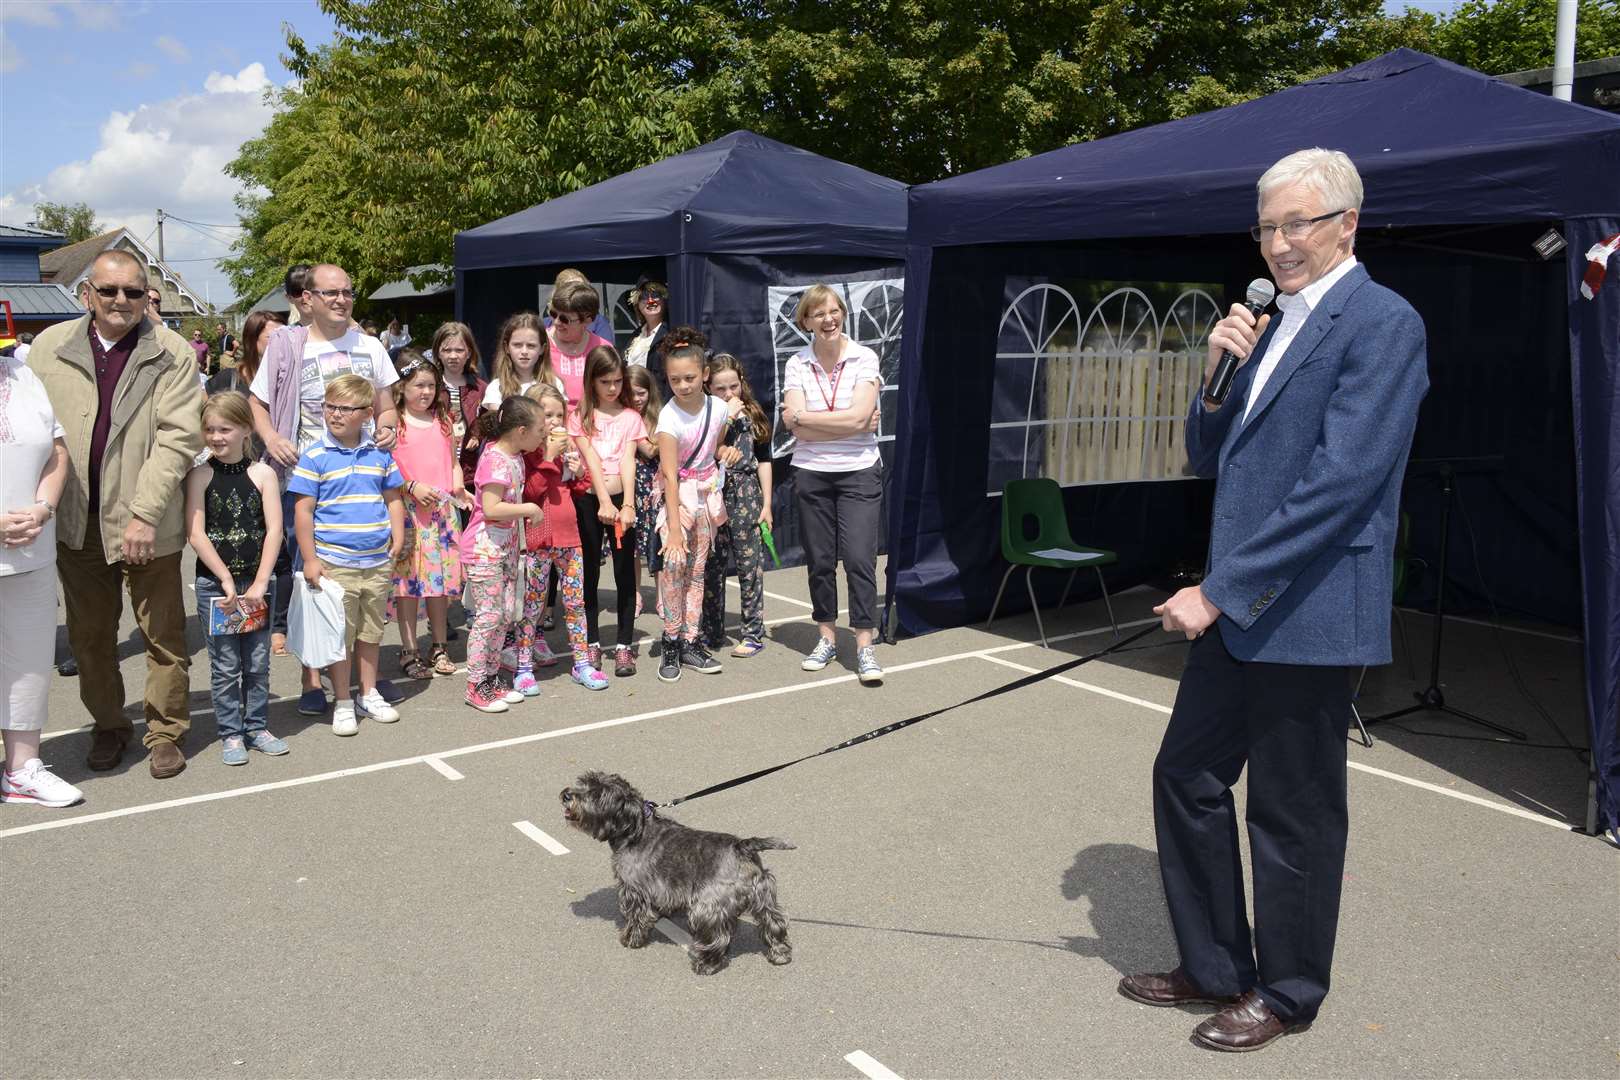 Aldington Primary school fete. Paul O'Grady opened the fete with dog OlgaPicture: Paul Amos FM3266575 (43892023)